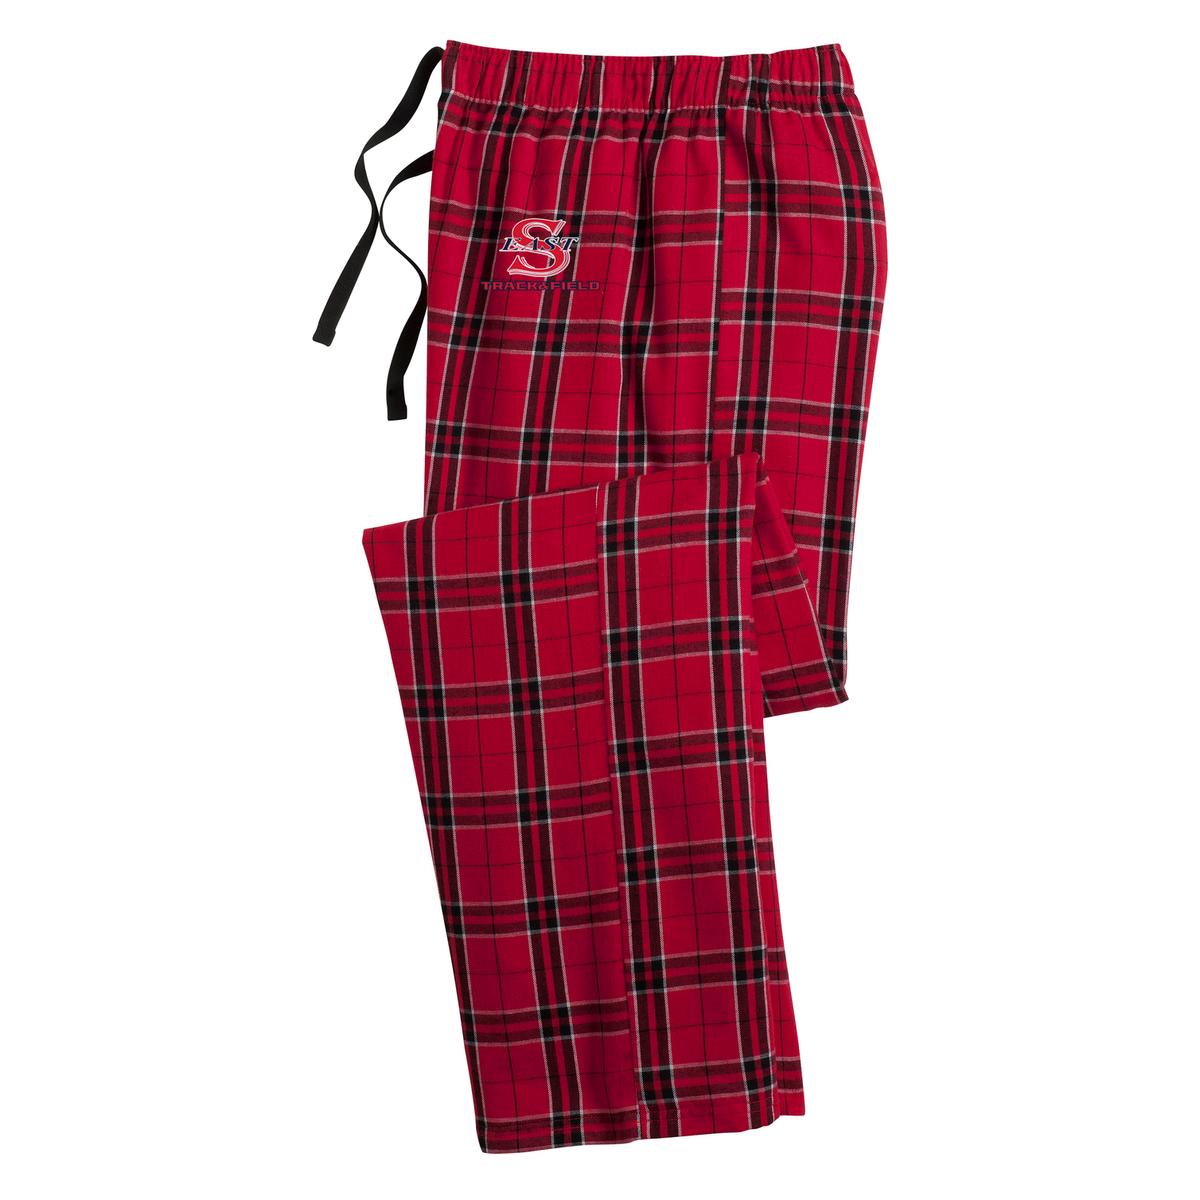 Smithtown East T&F Plaid Pajama Pants